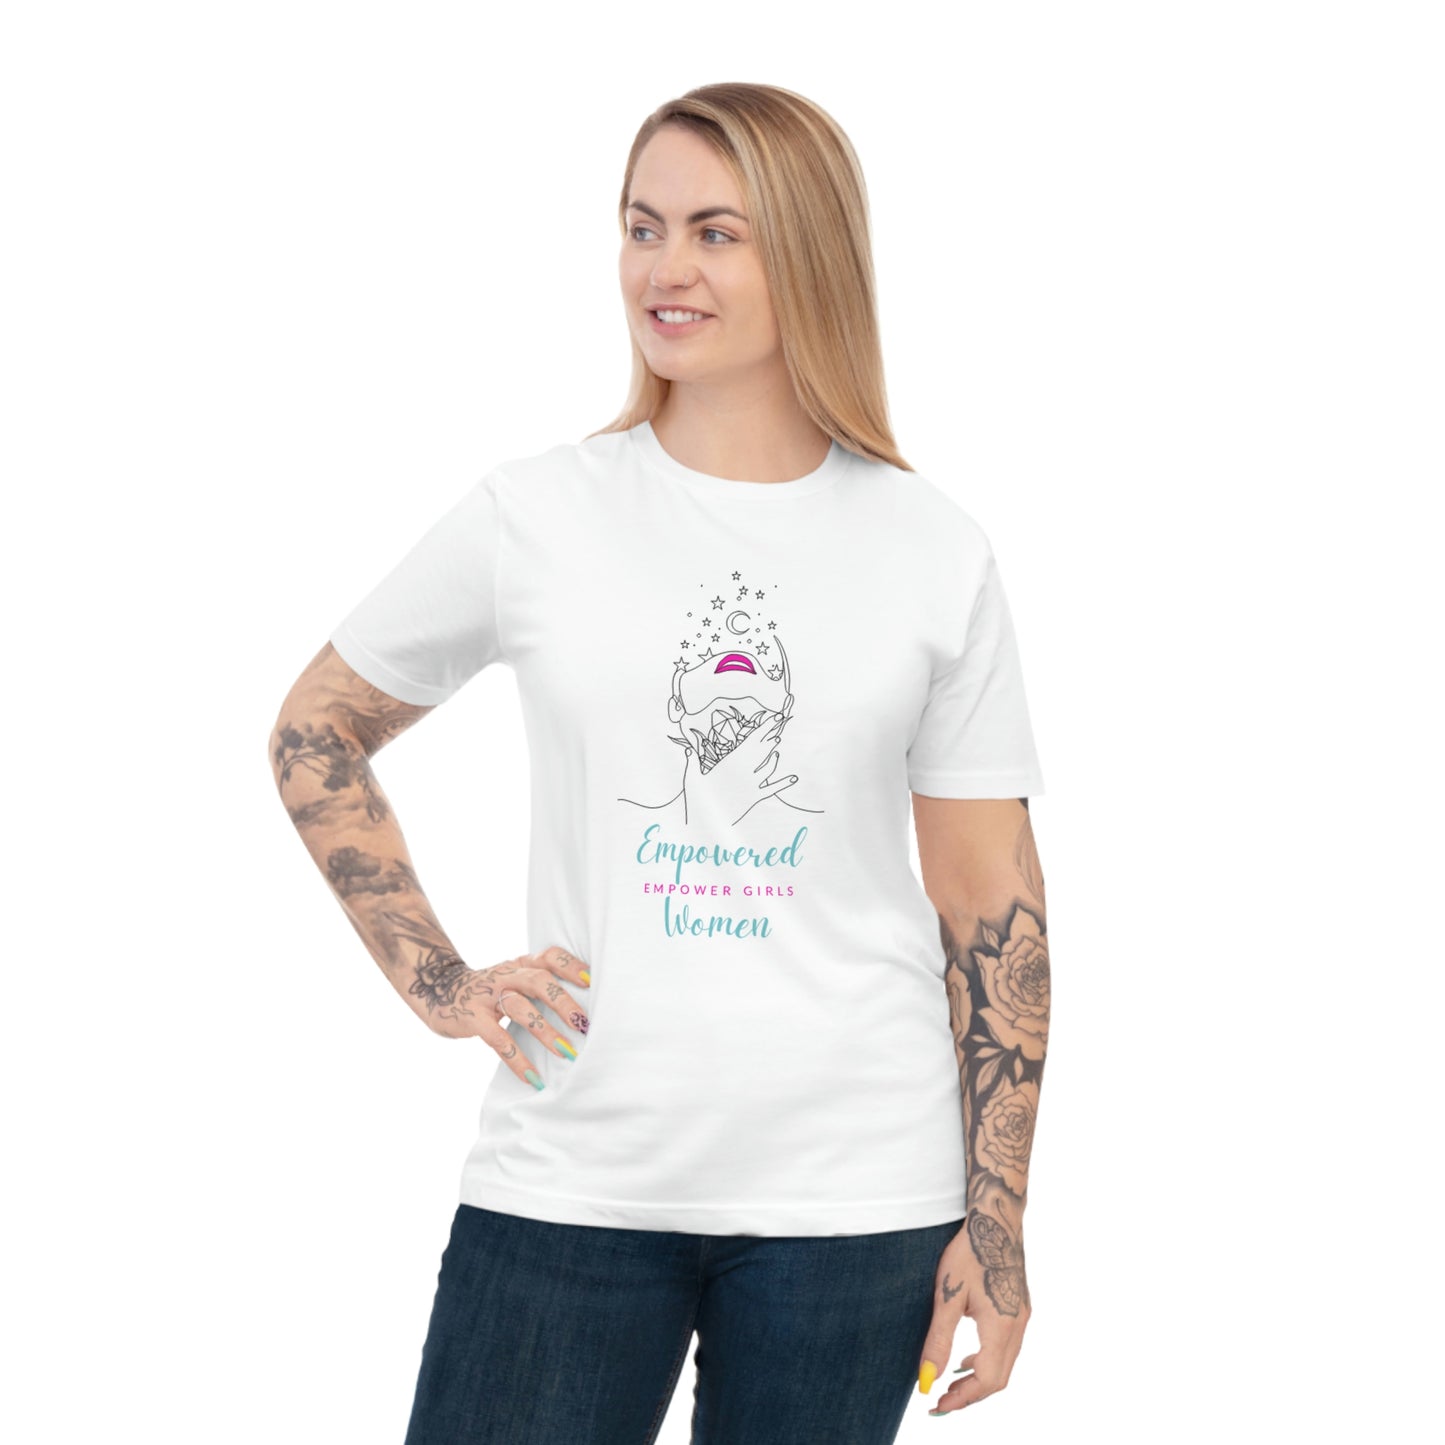 Empowered Women Empower Girls T-shirt